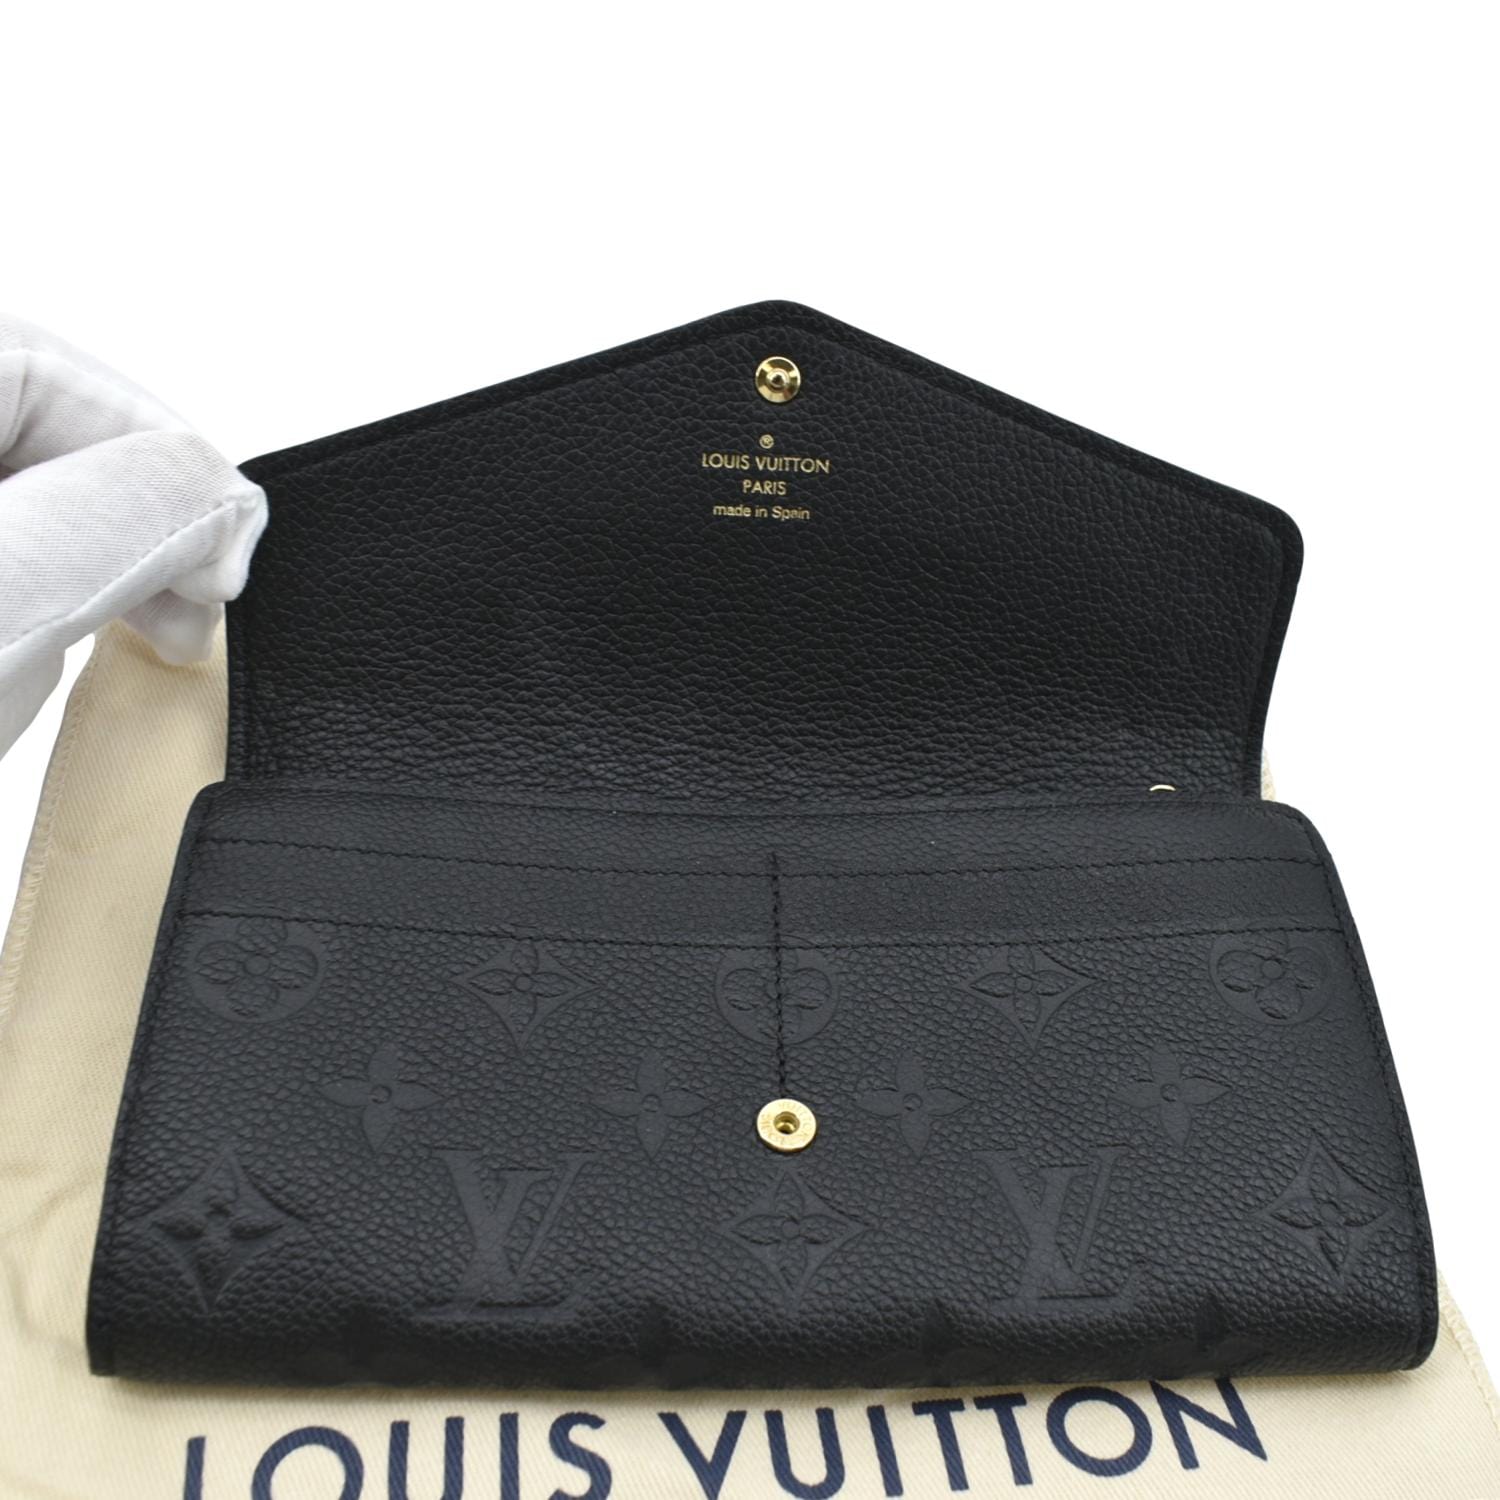 Louis Vuitton Sarah Wallet in Black Empreinte Monogram Leather